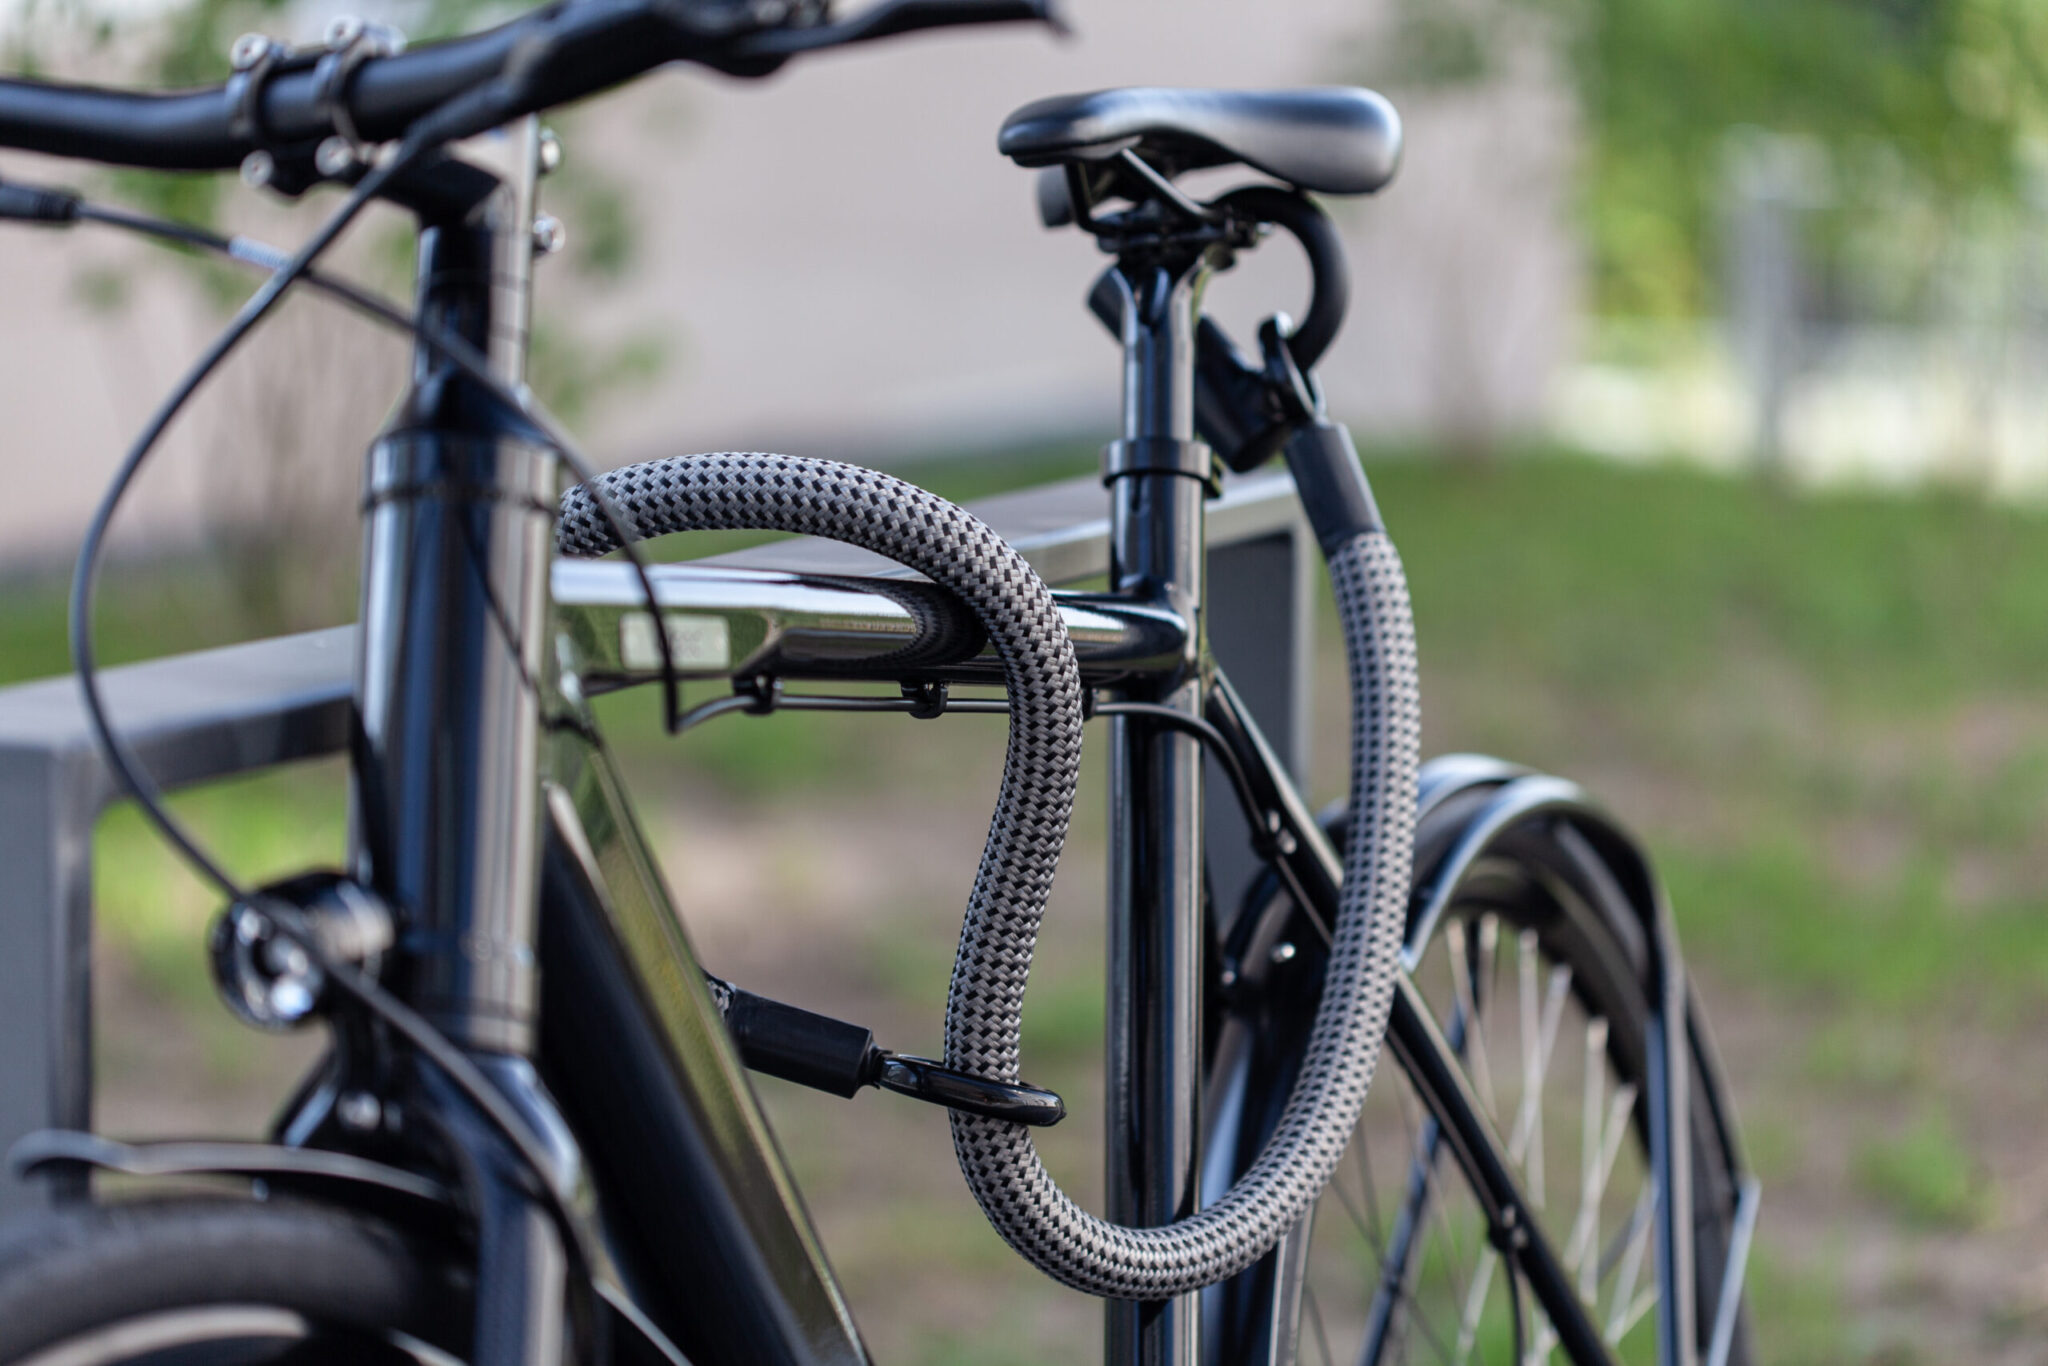 Flexible U-lock extension tex-lock eyelet in gray encloses bike frame on bike stand